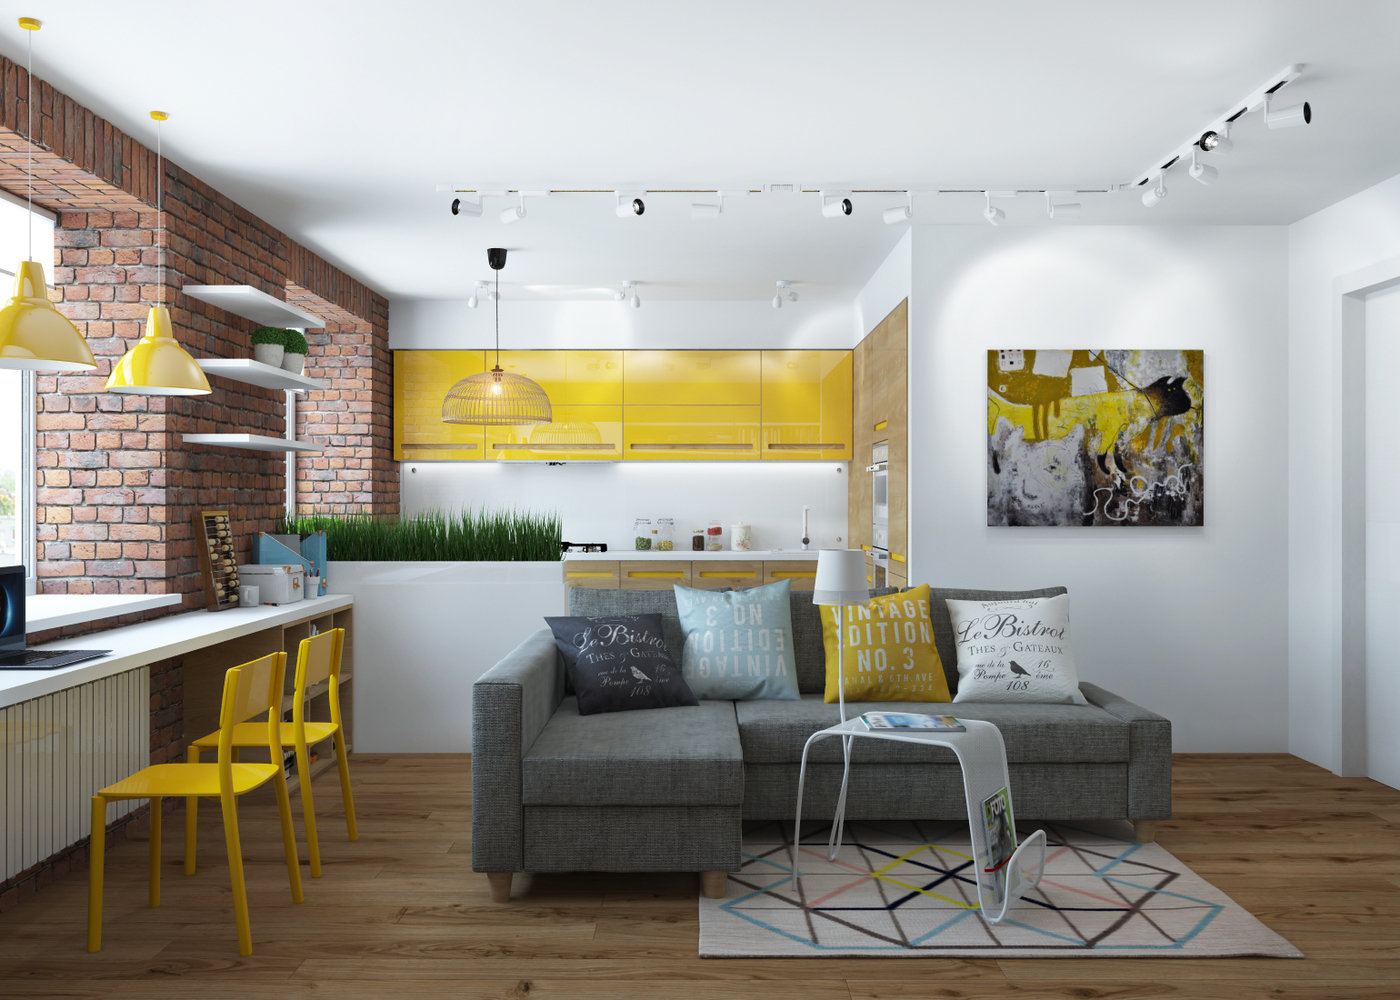 Желтый диван на кухне в интерьере фото